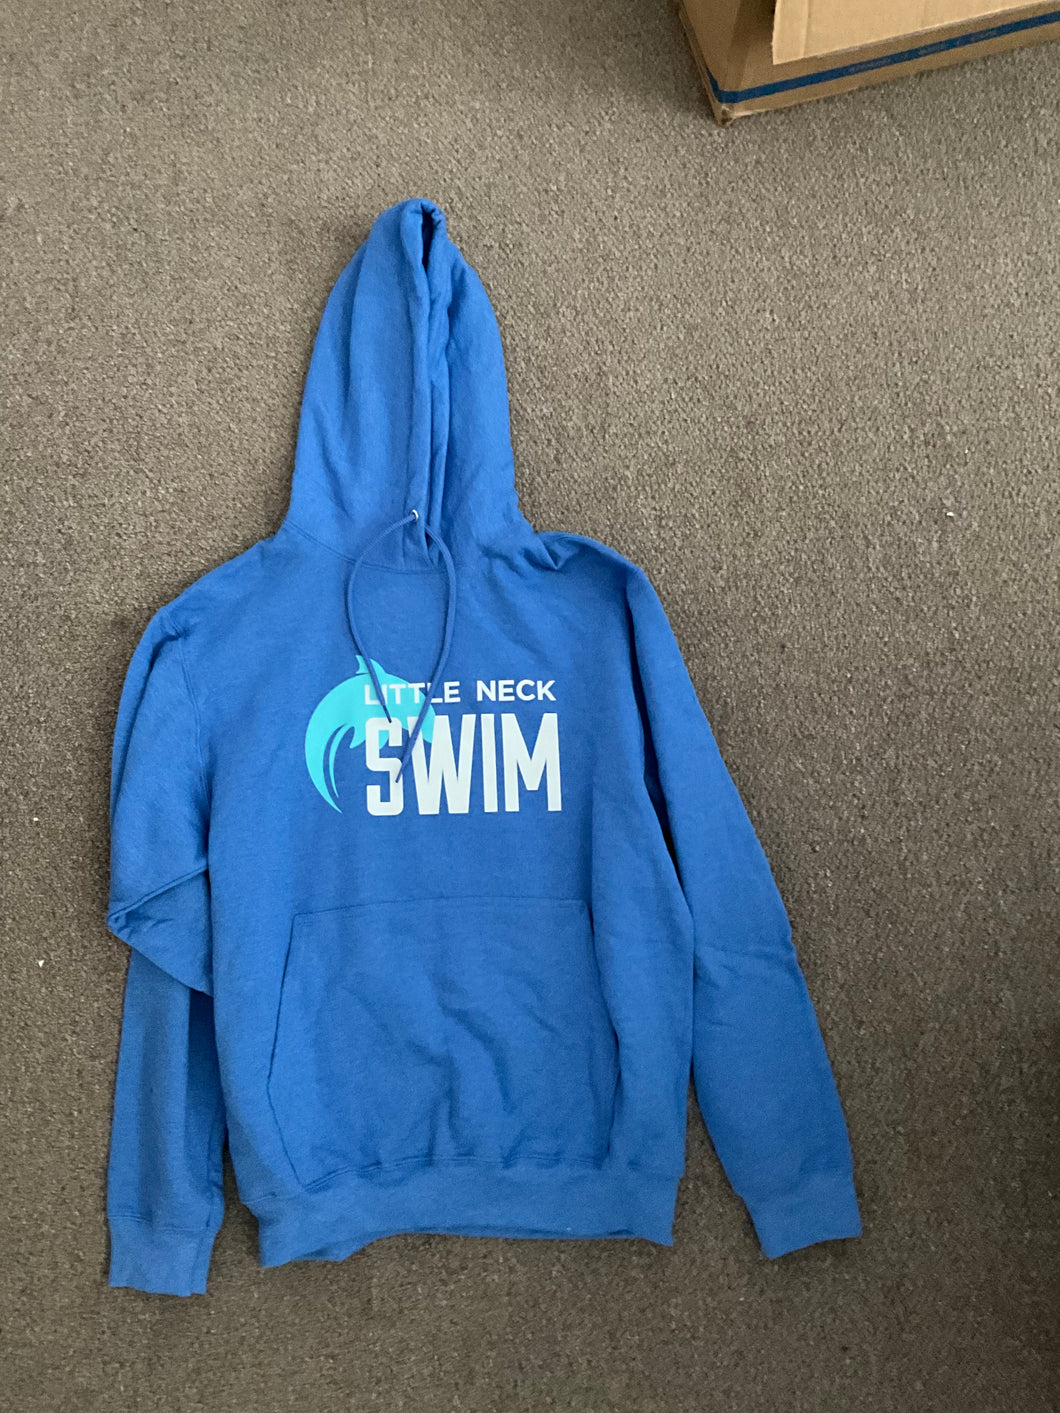 Little Neck Swim/Royal blue Hoodie Sweatshirt